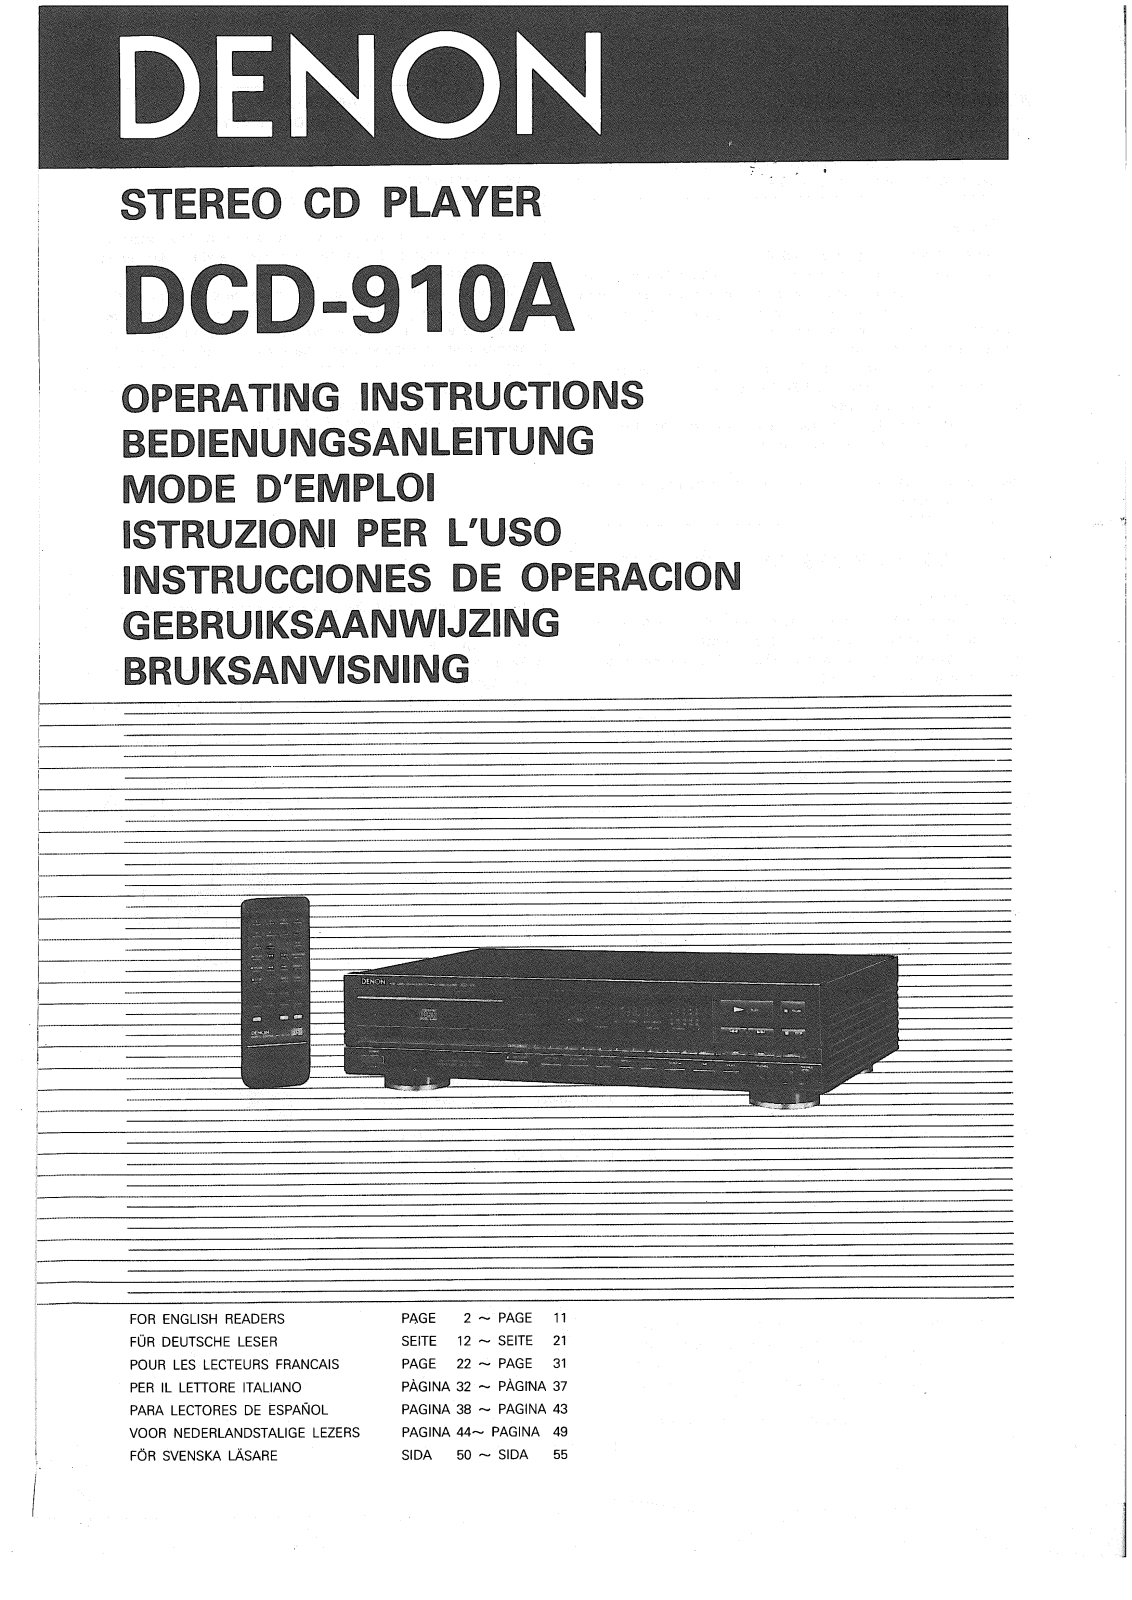 Denon DCD-910A Owner's Manual